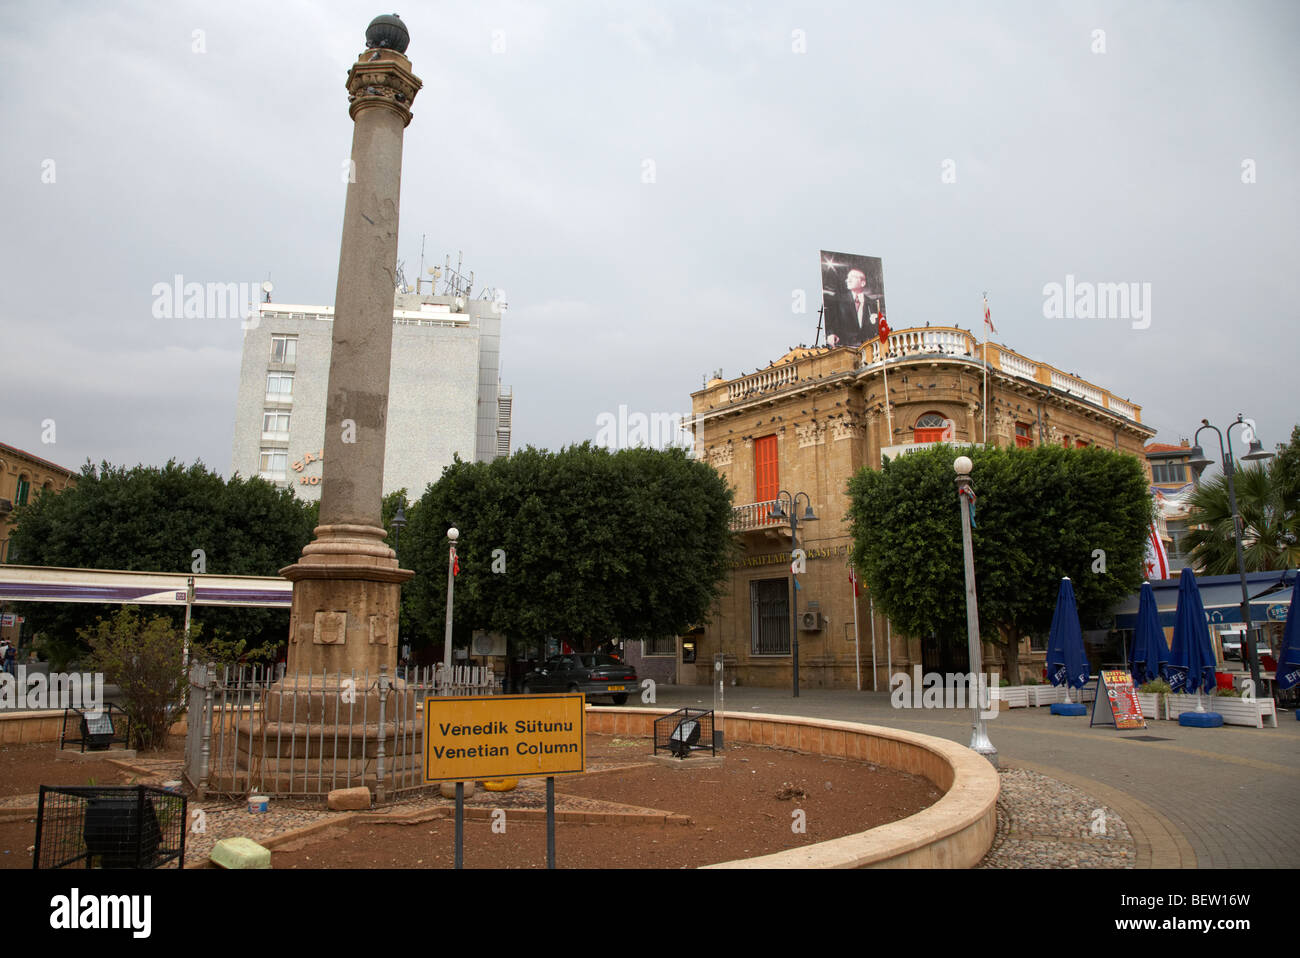 The Venetian Column in Ataturk square nicosia TRNC turkish republic of northern cyprus Stock Photo